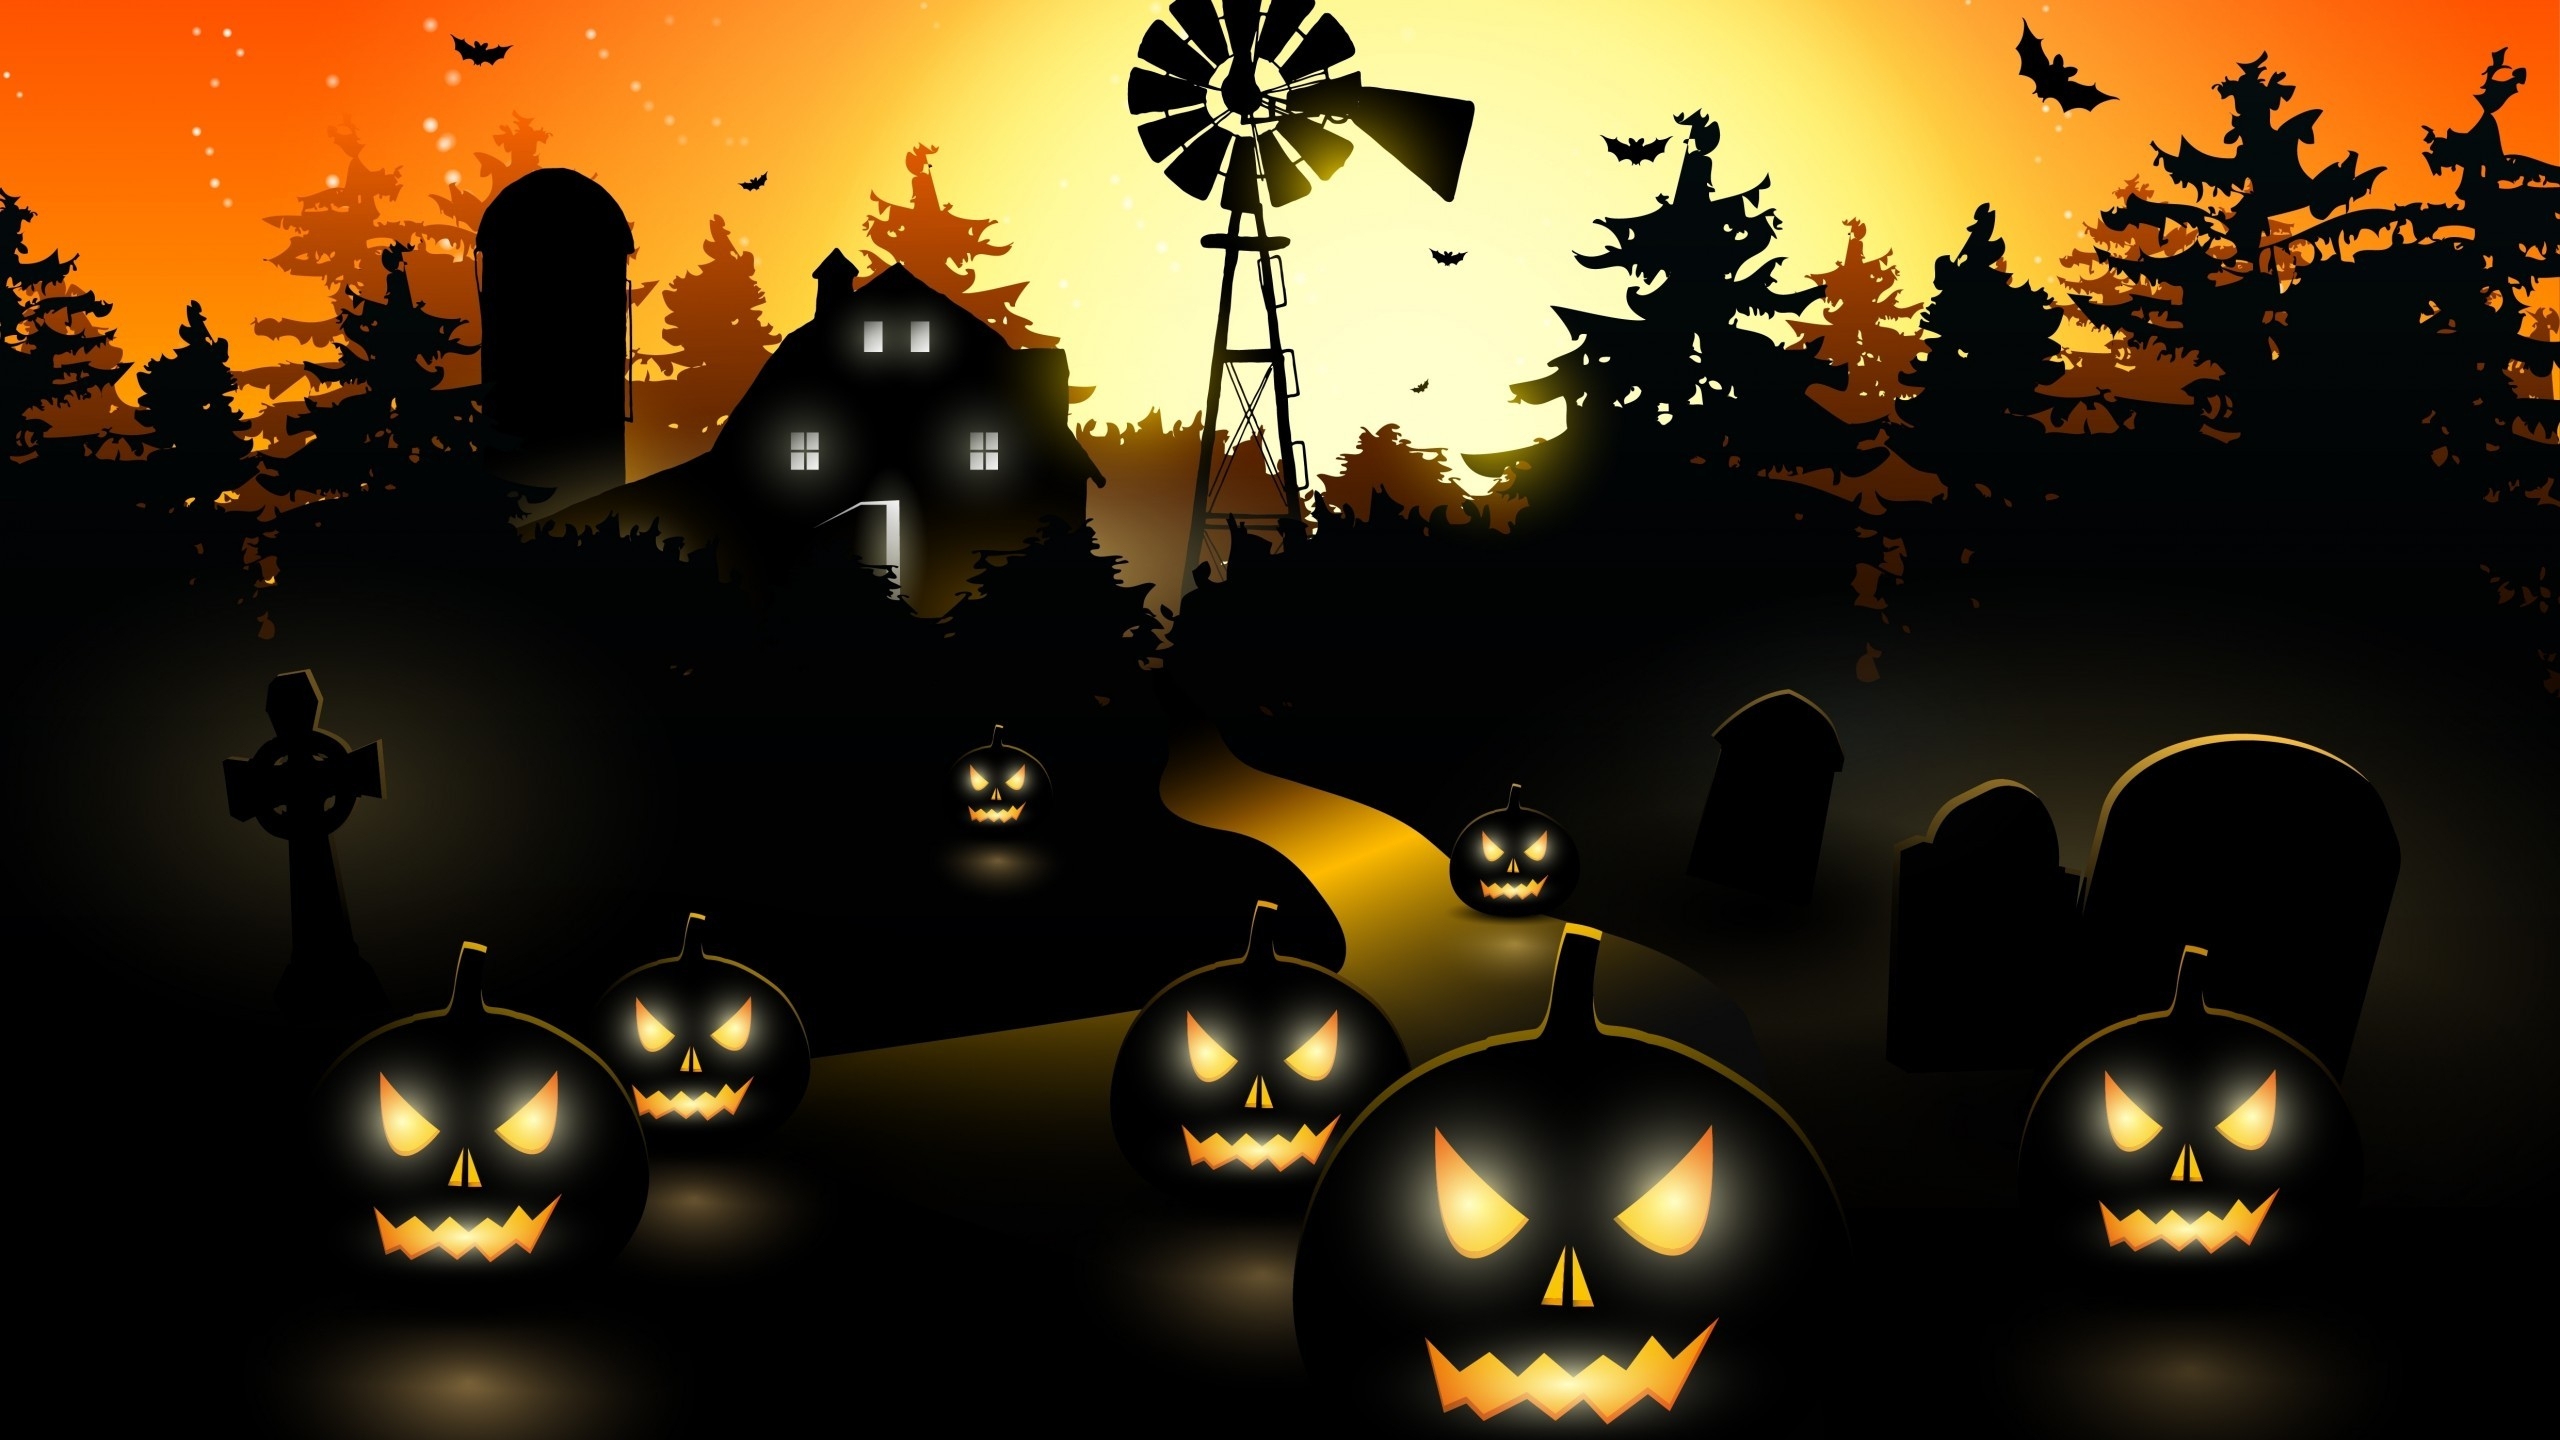 Halloween Black Pumpkins for 2560x1440 HDTV resolution